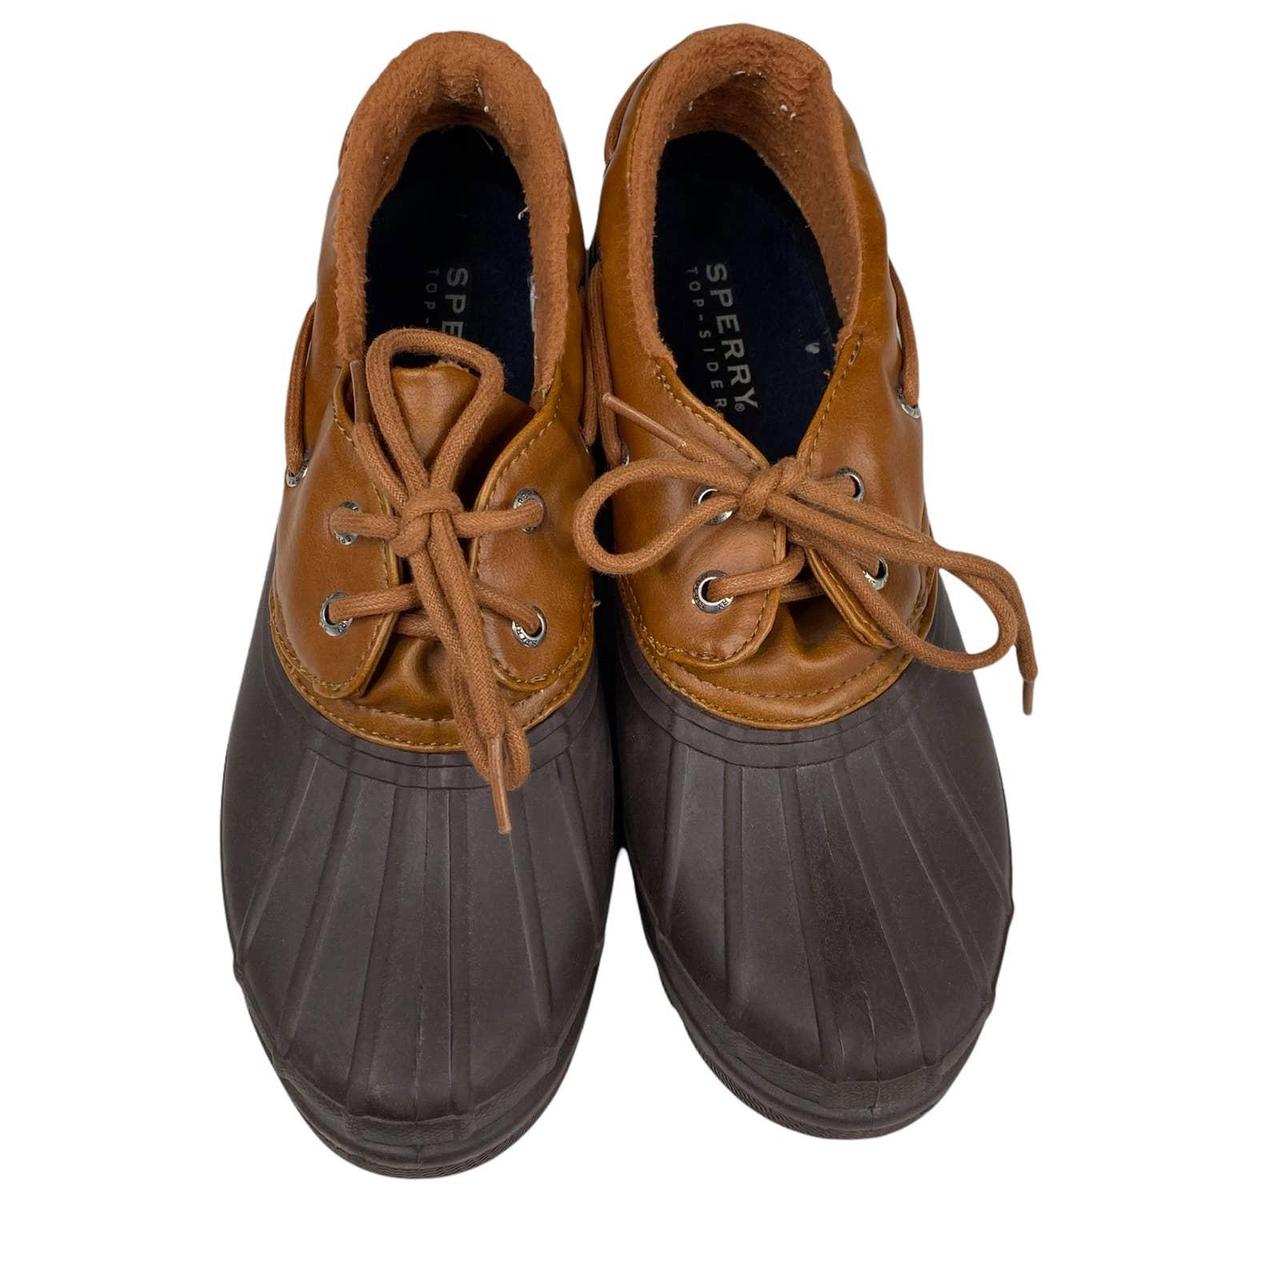 Sperry Women's Brown Boots (2)